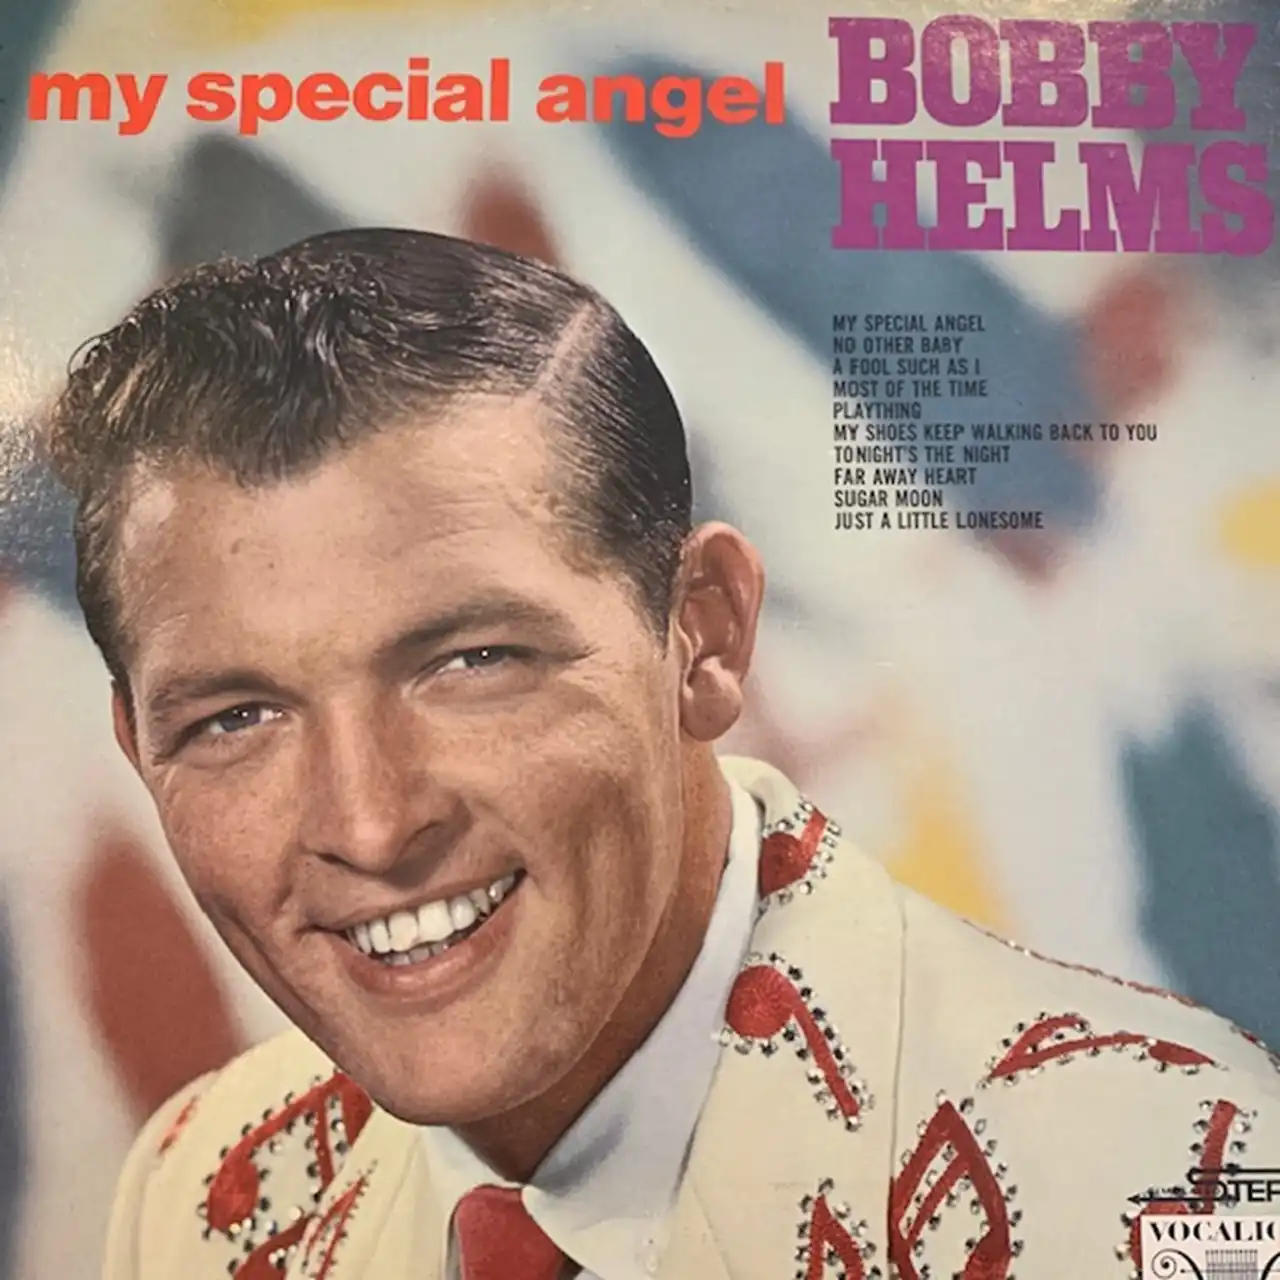 BOBBY HELMS / MY SPECIAL ANGEL